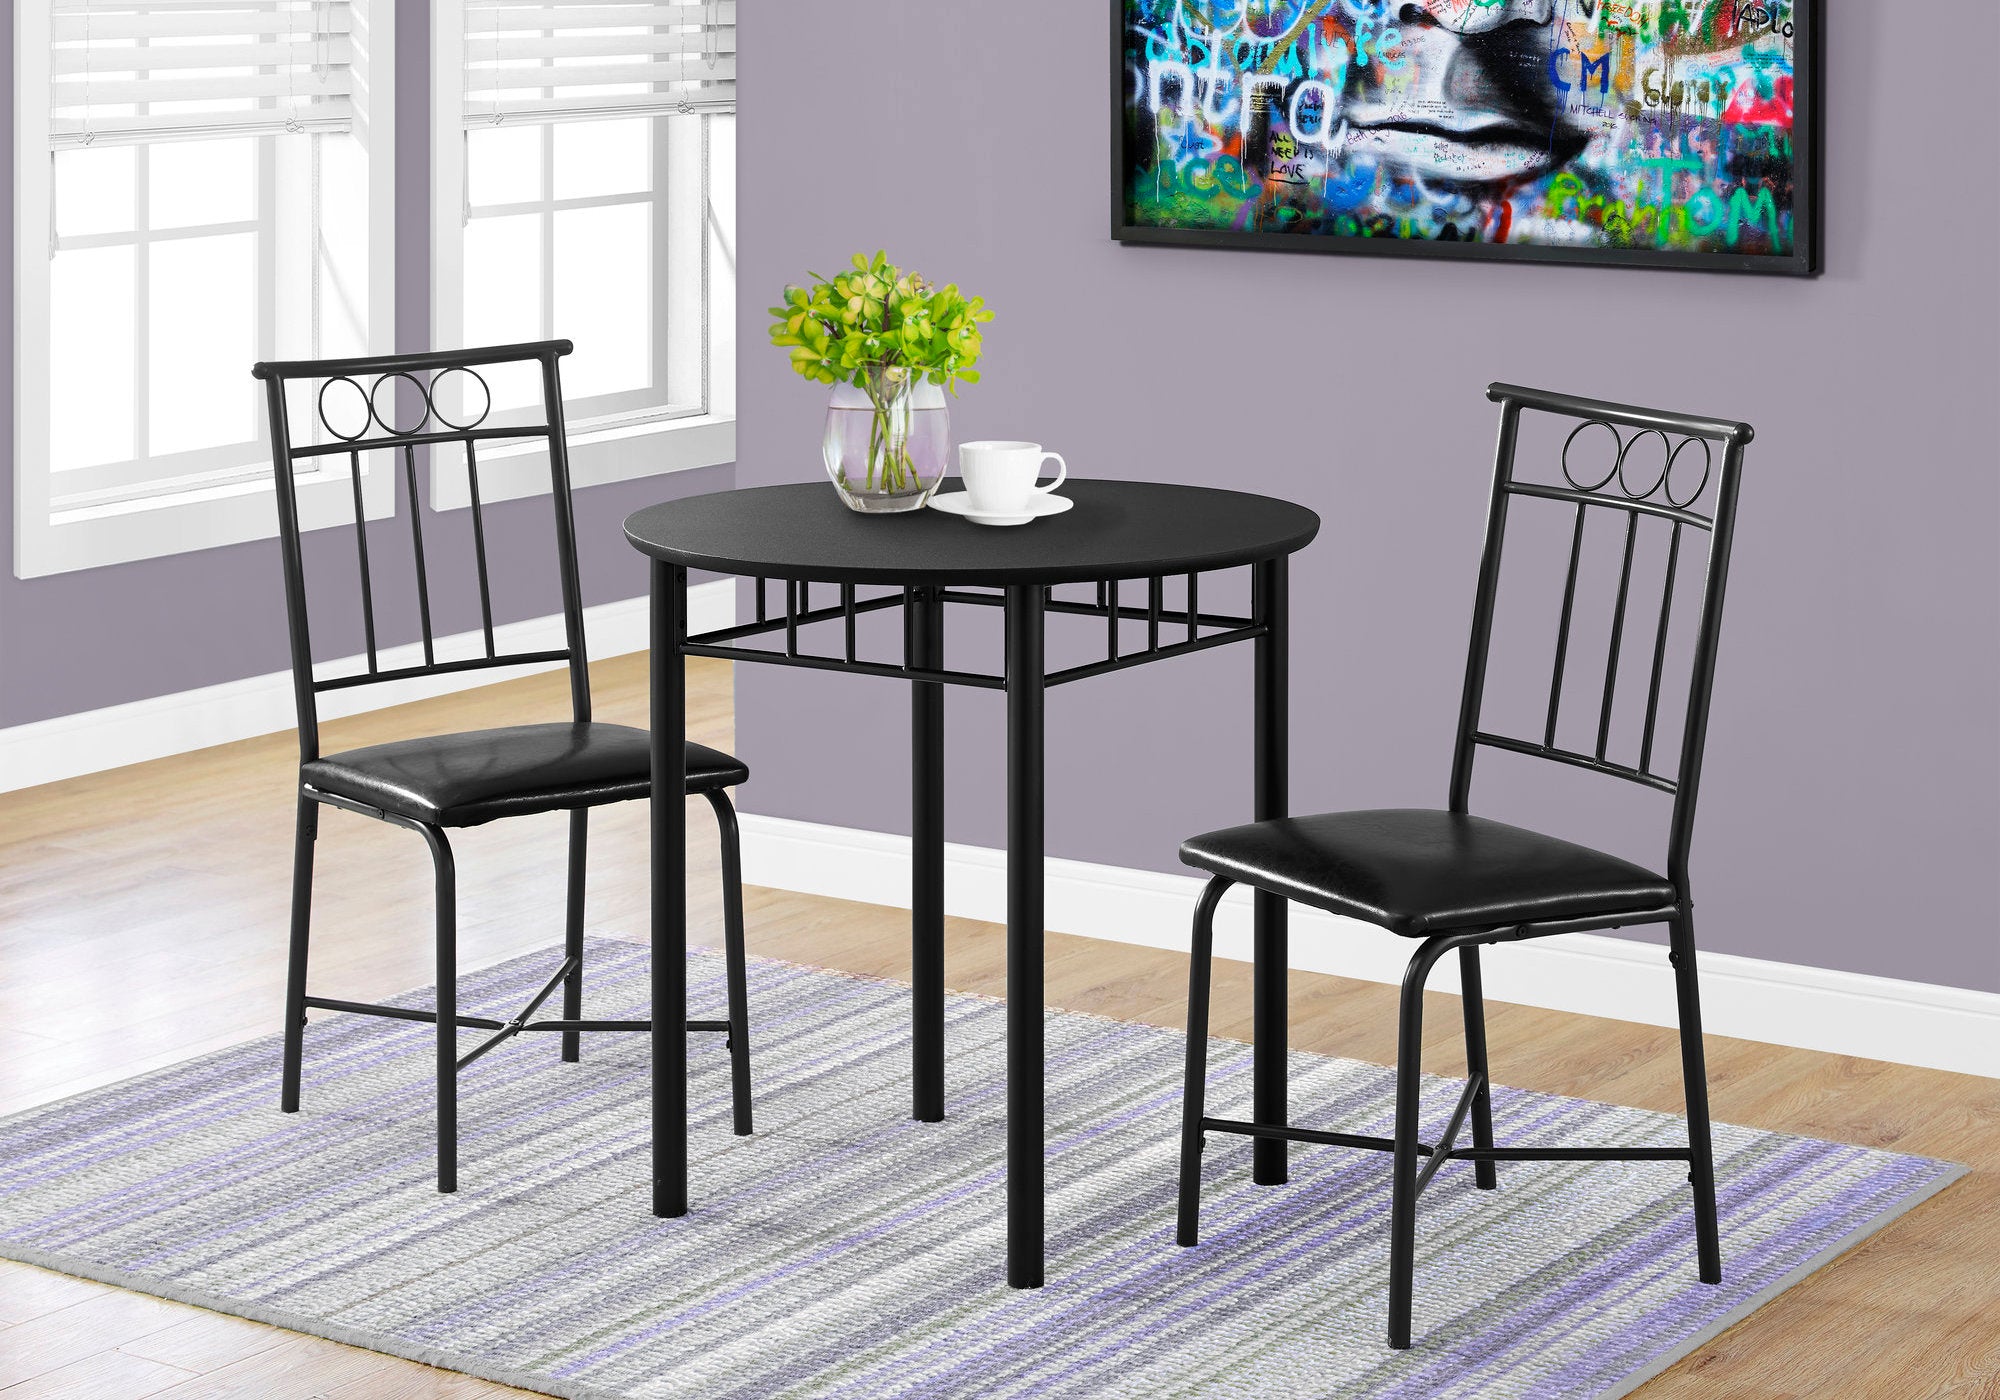 Modern Home Sturdy Round Dining Table 3 Pcs Set (Black)